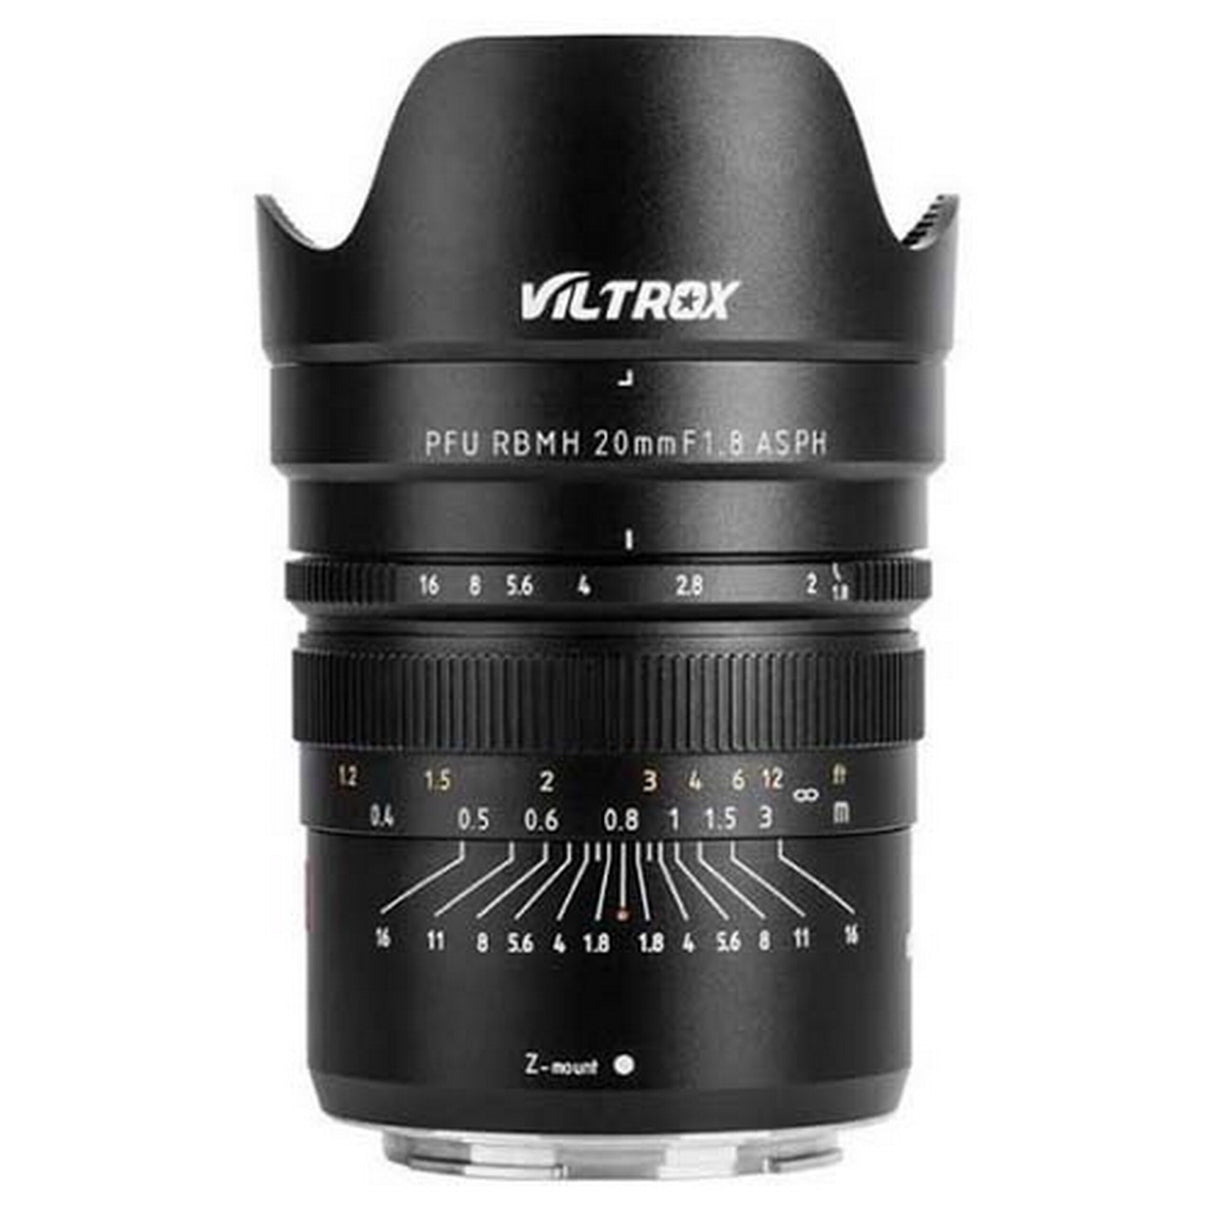 Viltrox FZ-20MM 20mm F/1.8 ASPH PFU RBMH Lens for Nikon Z